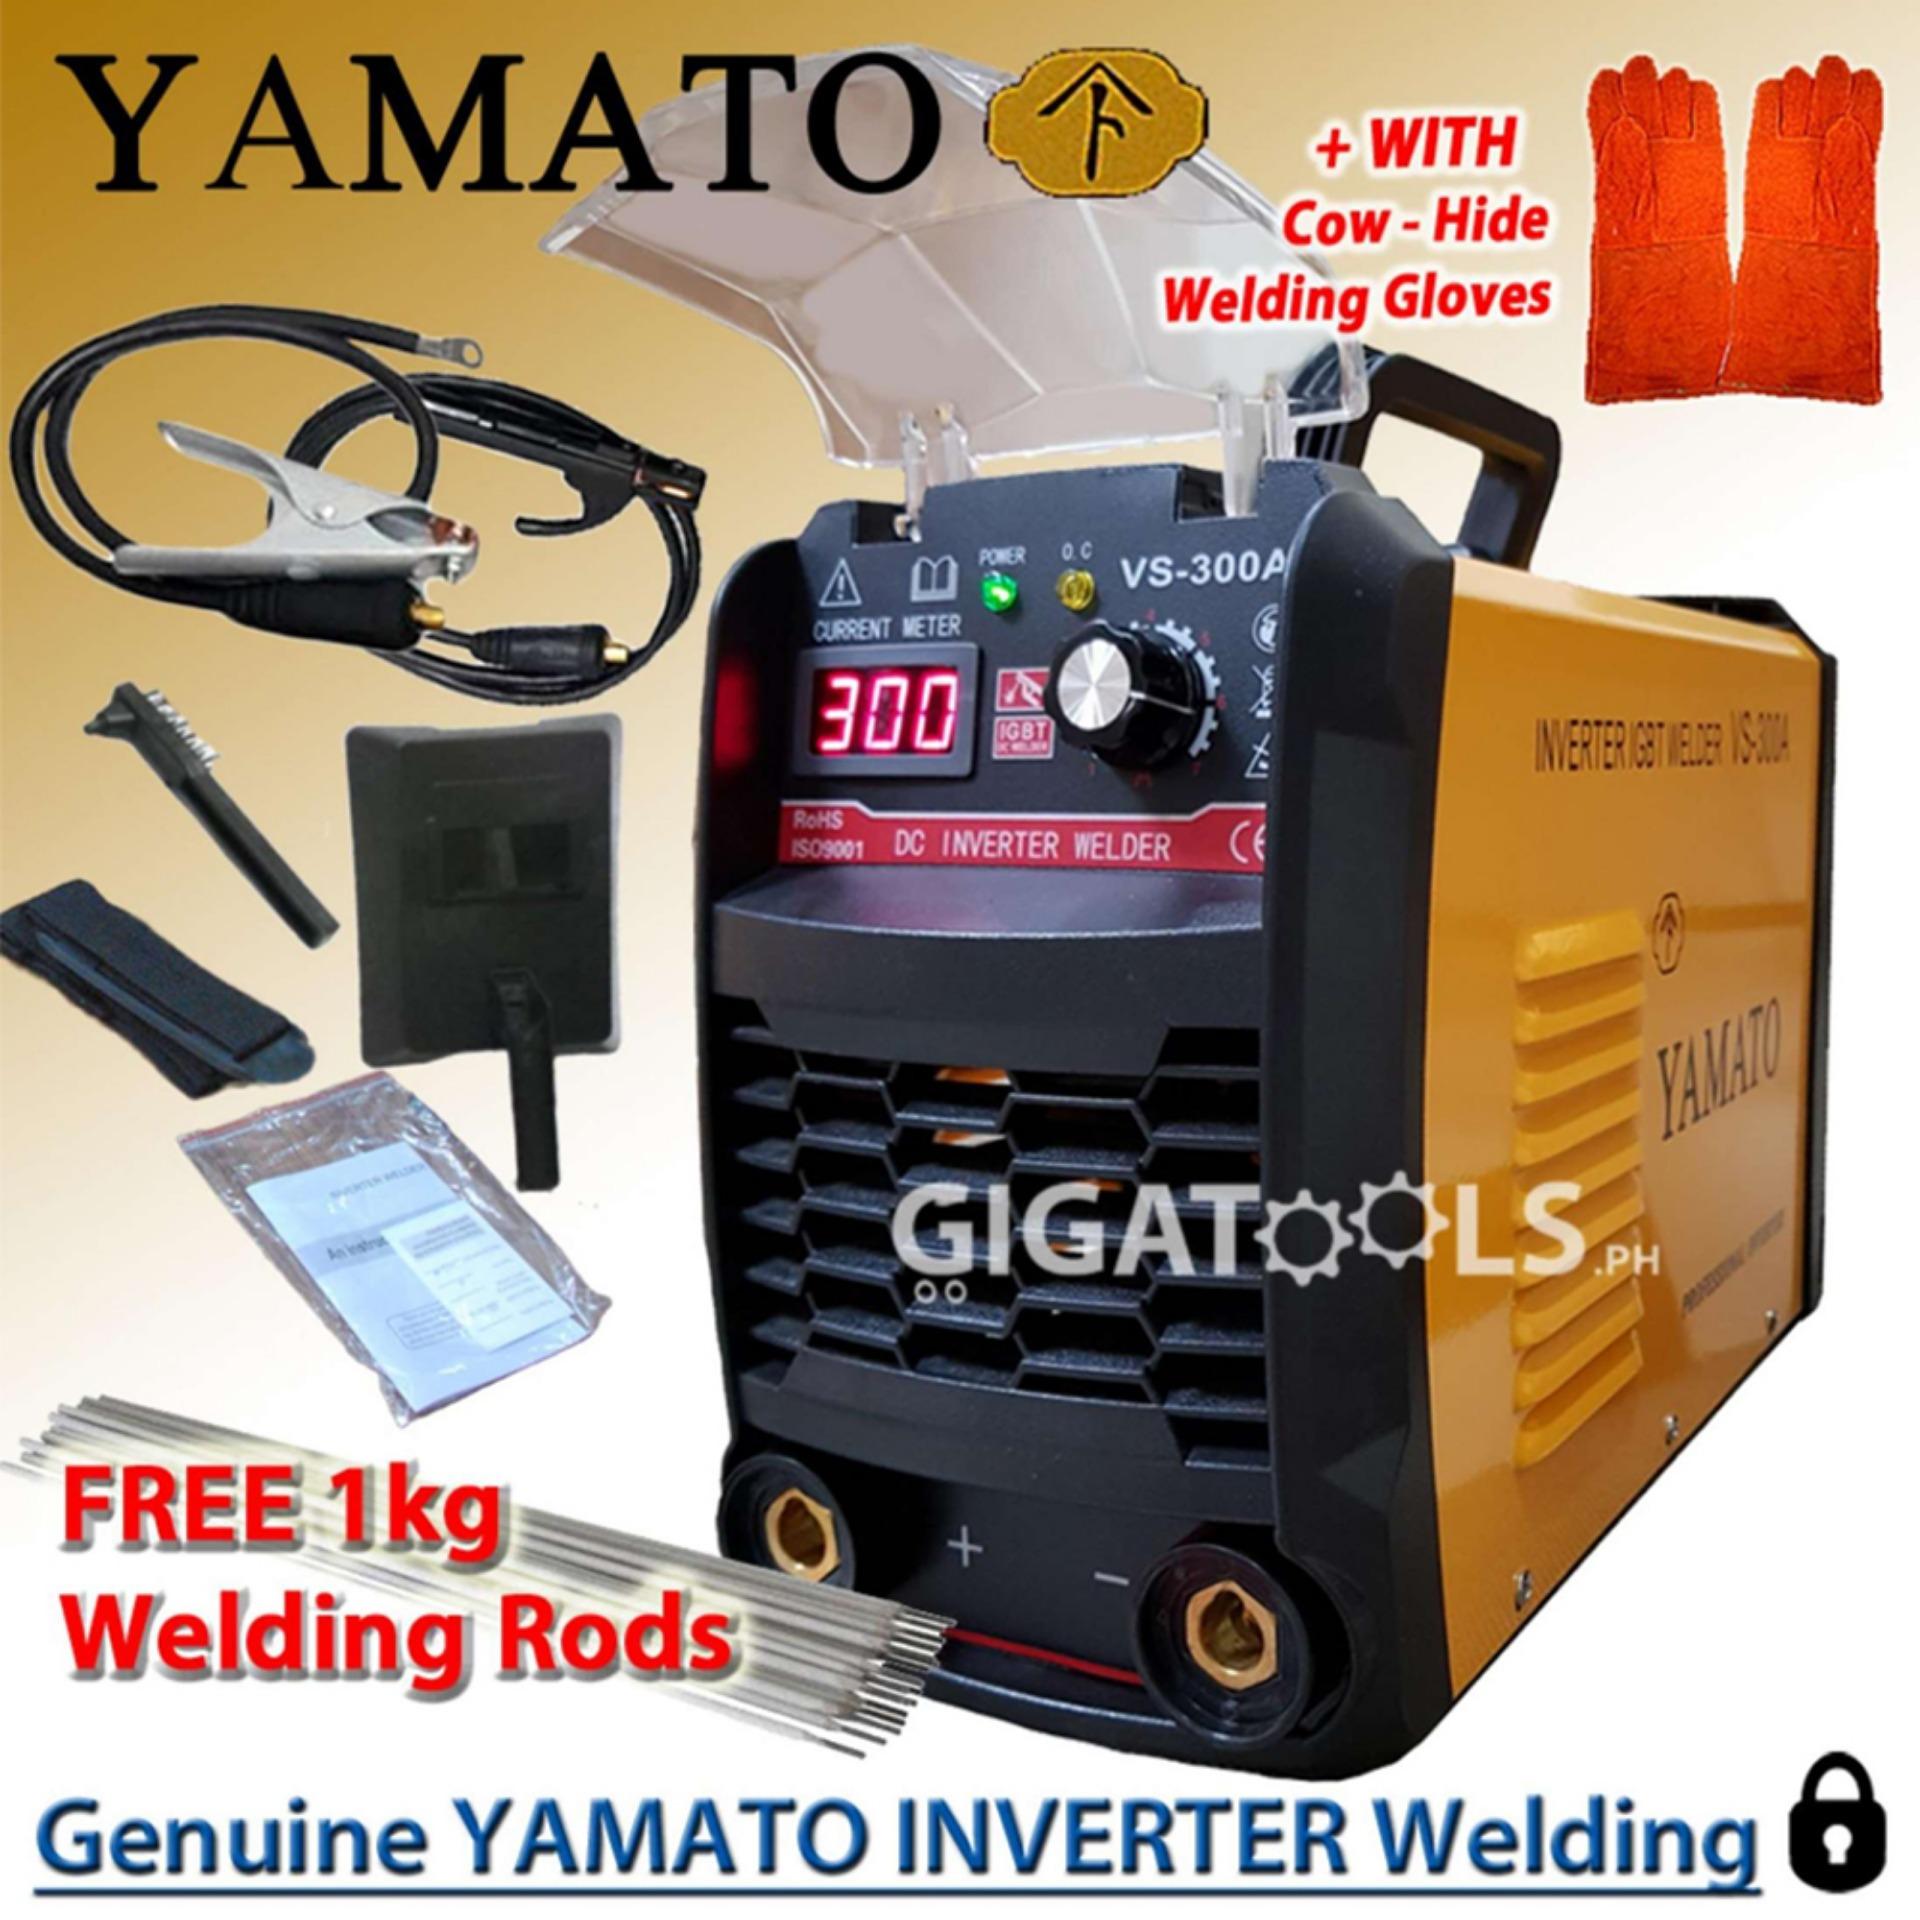 Yamato Inverter Welding Machine 300 Shop Yamato Inverter Welding Machine 300 With Great Discounts And Prices Online Lazada Philippines